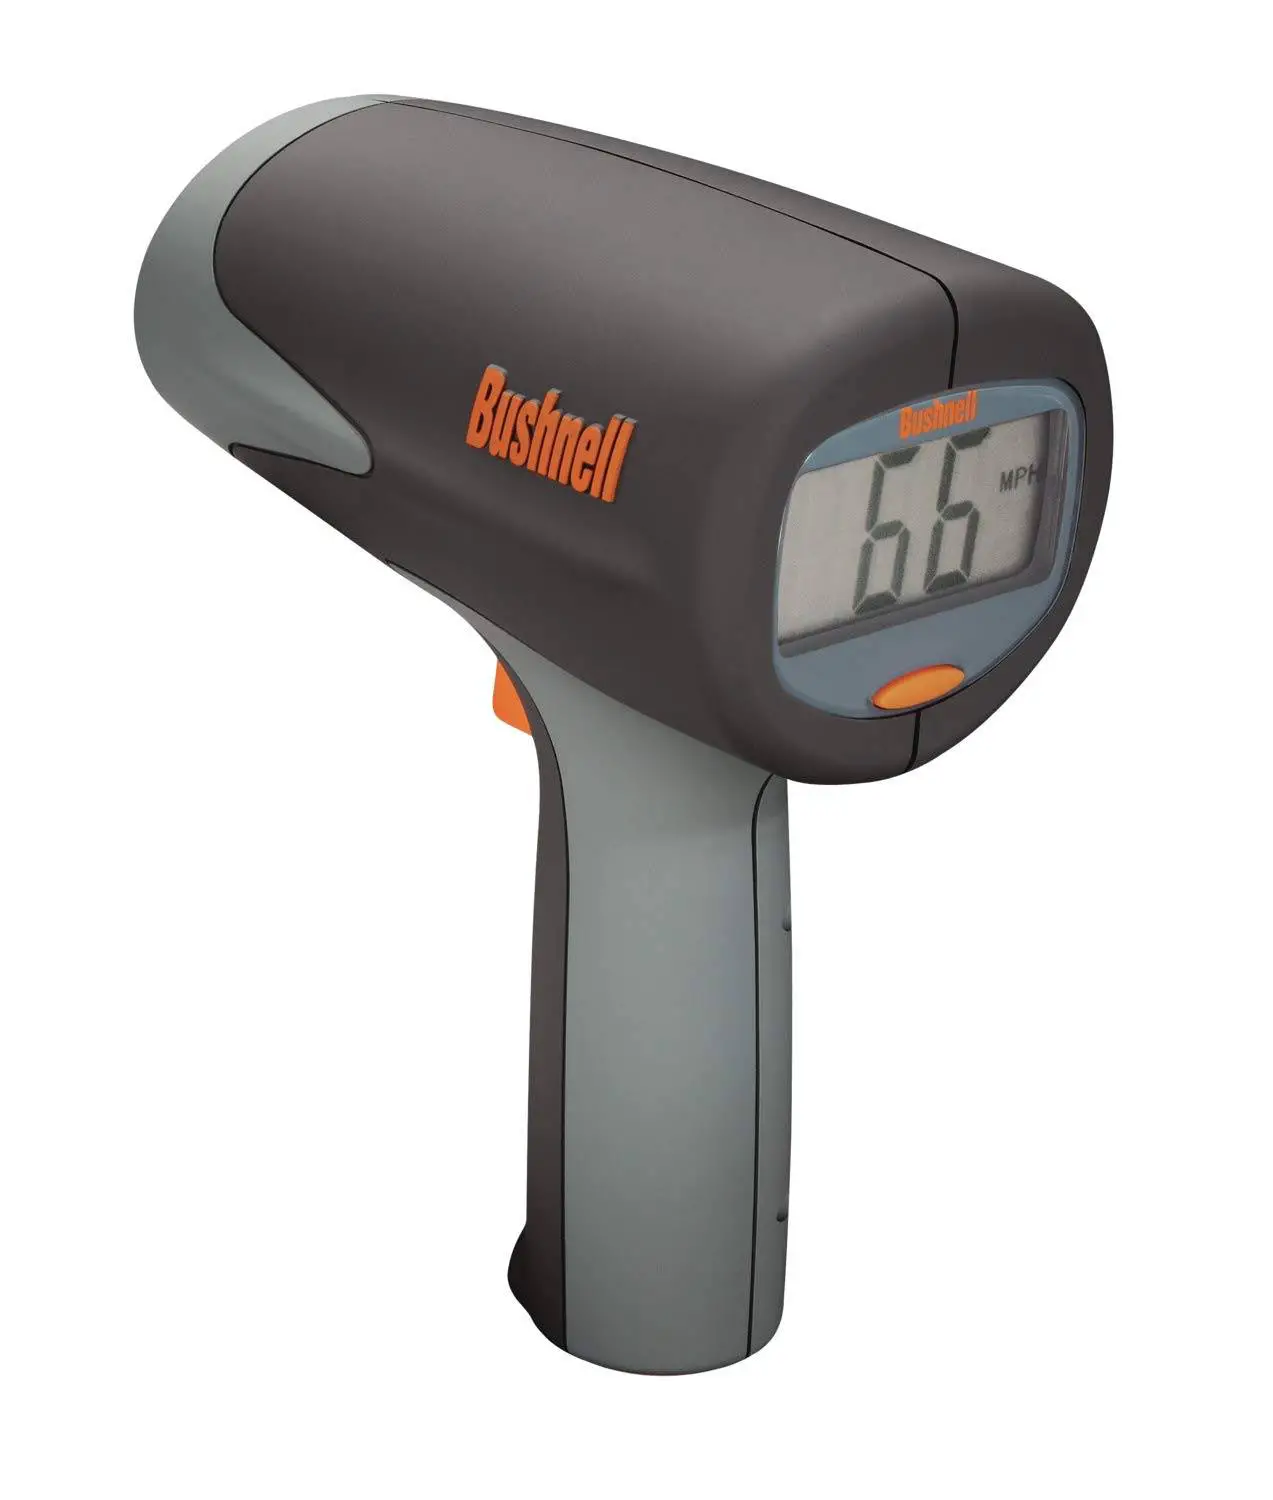 Bushnell Velocity Speed Baseball Radar Gun